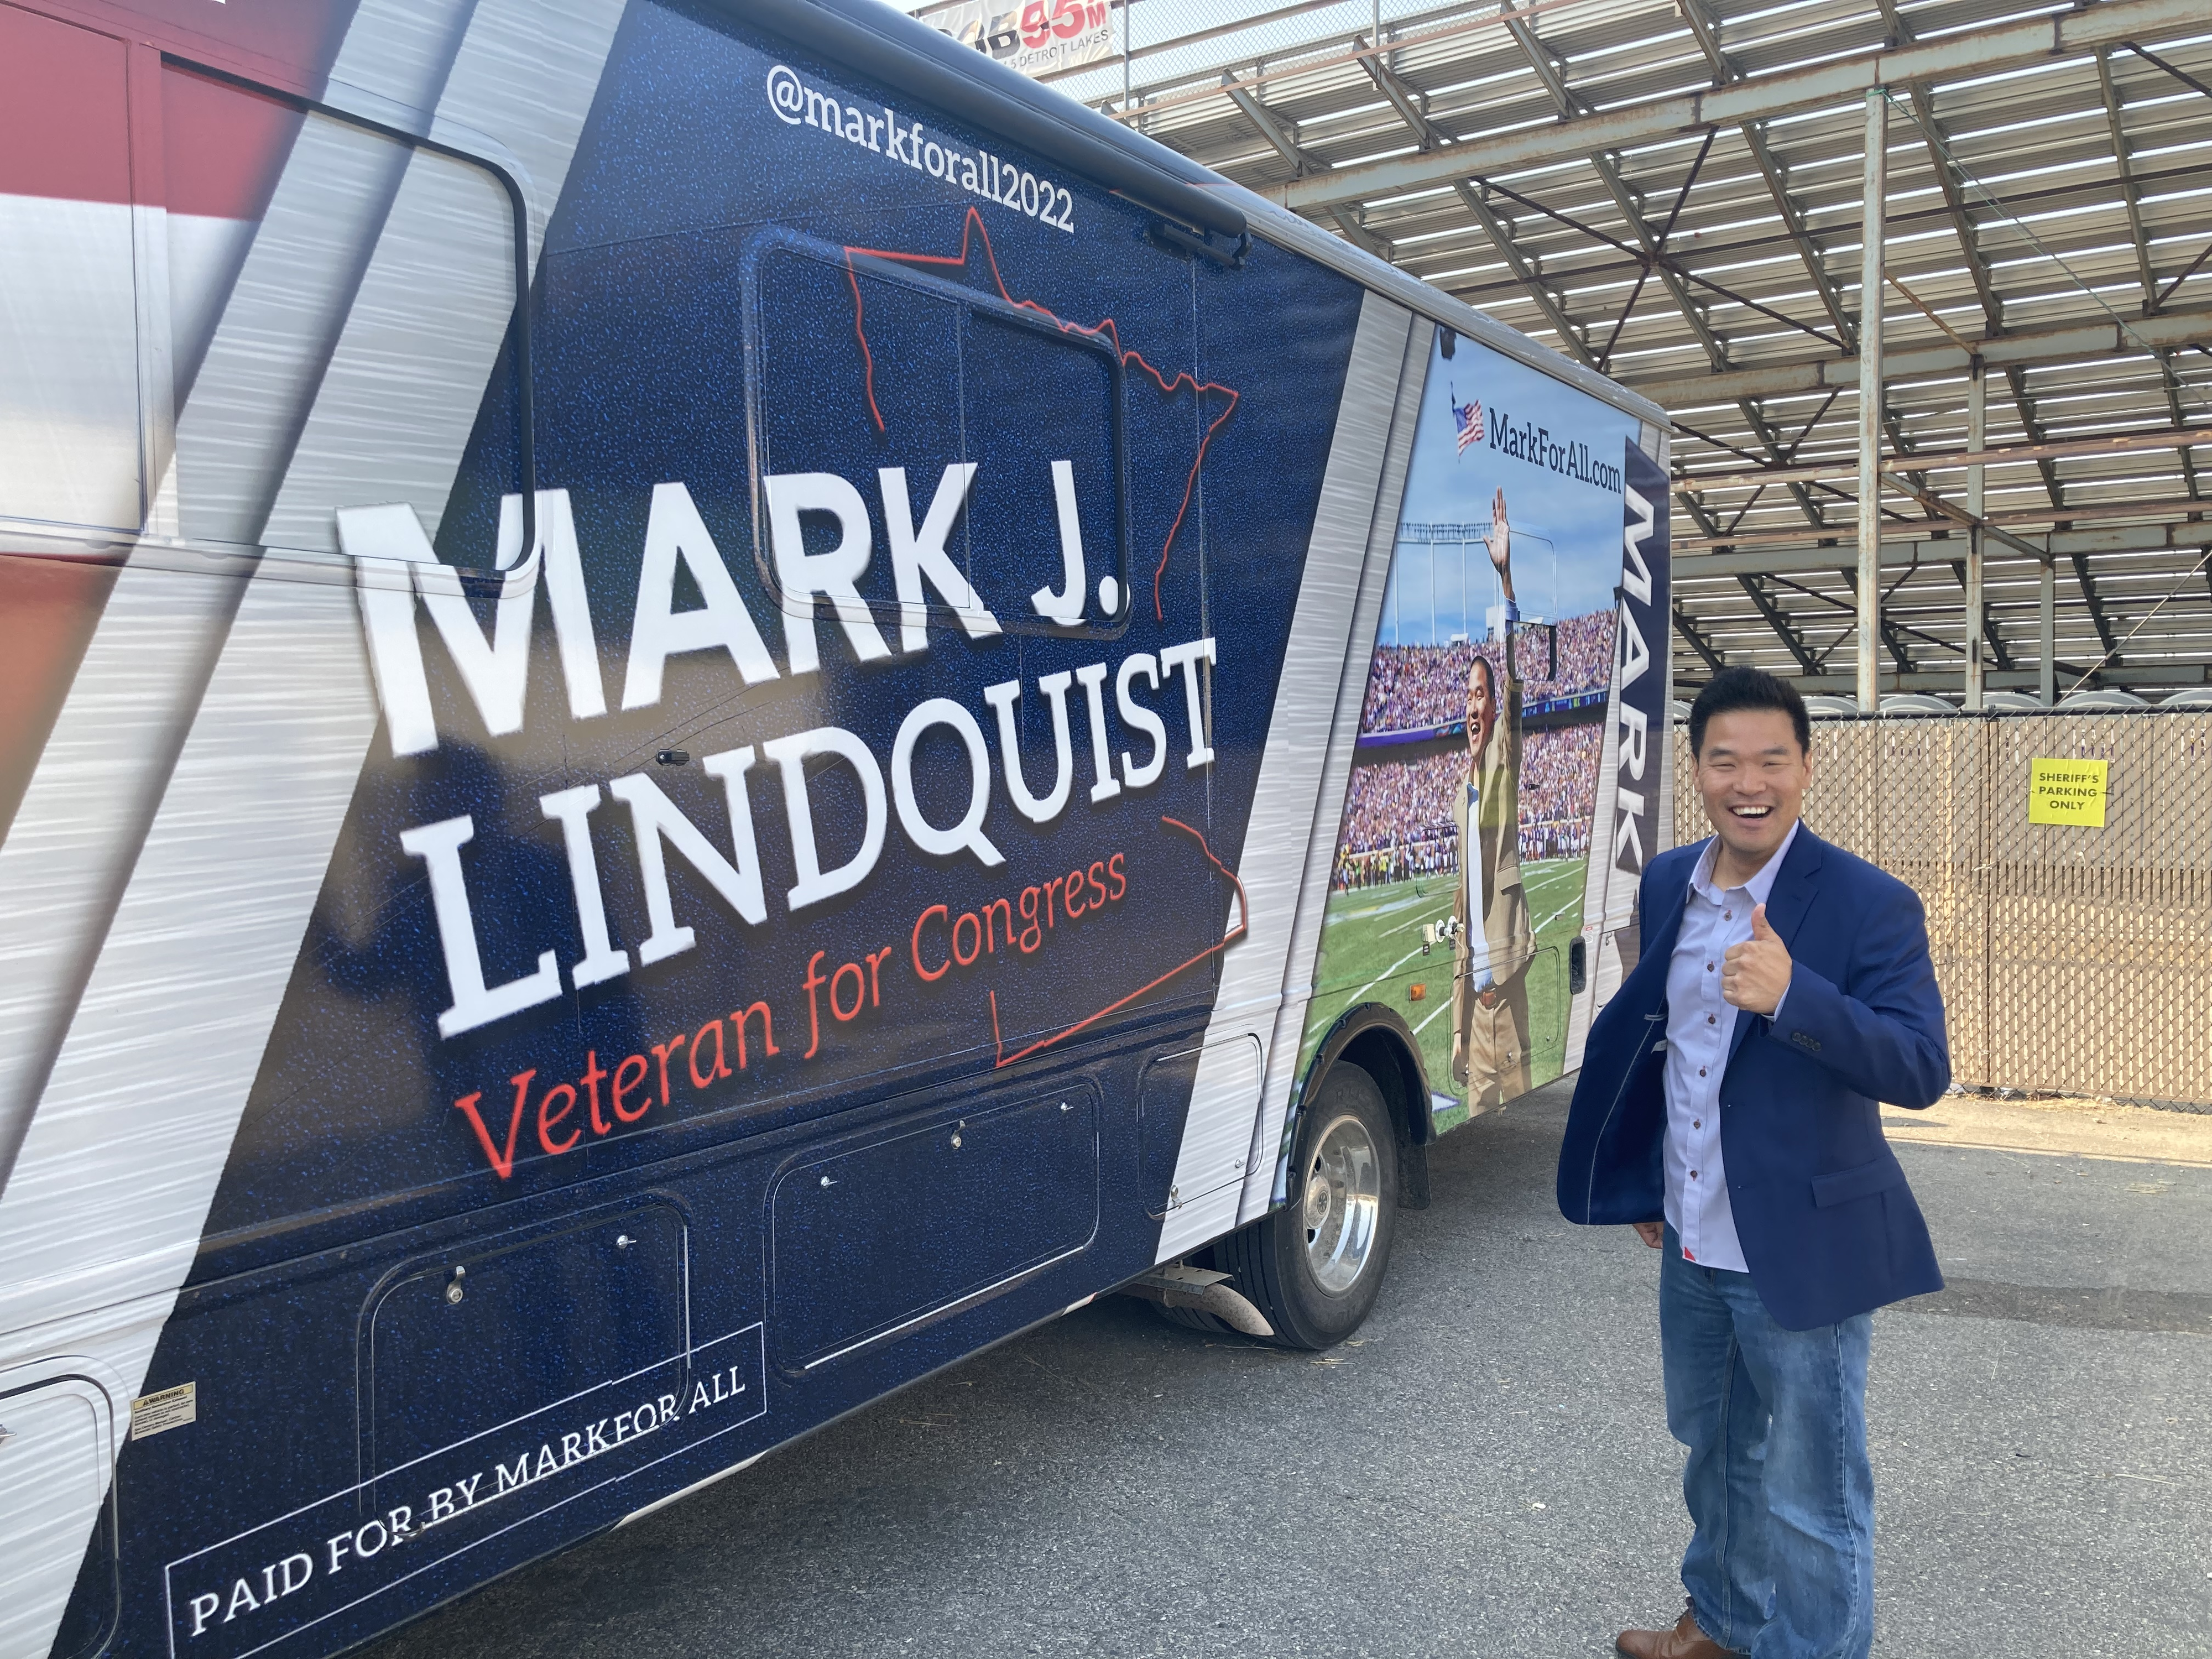 Mark J. Lindquist is running for Congress